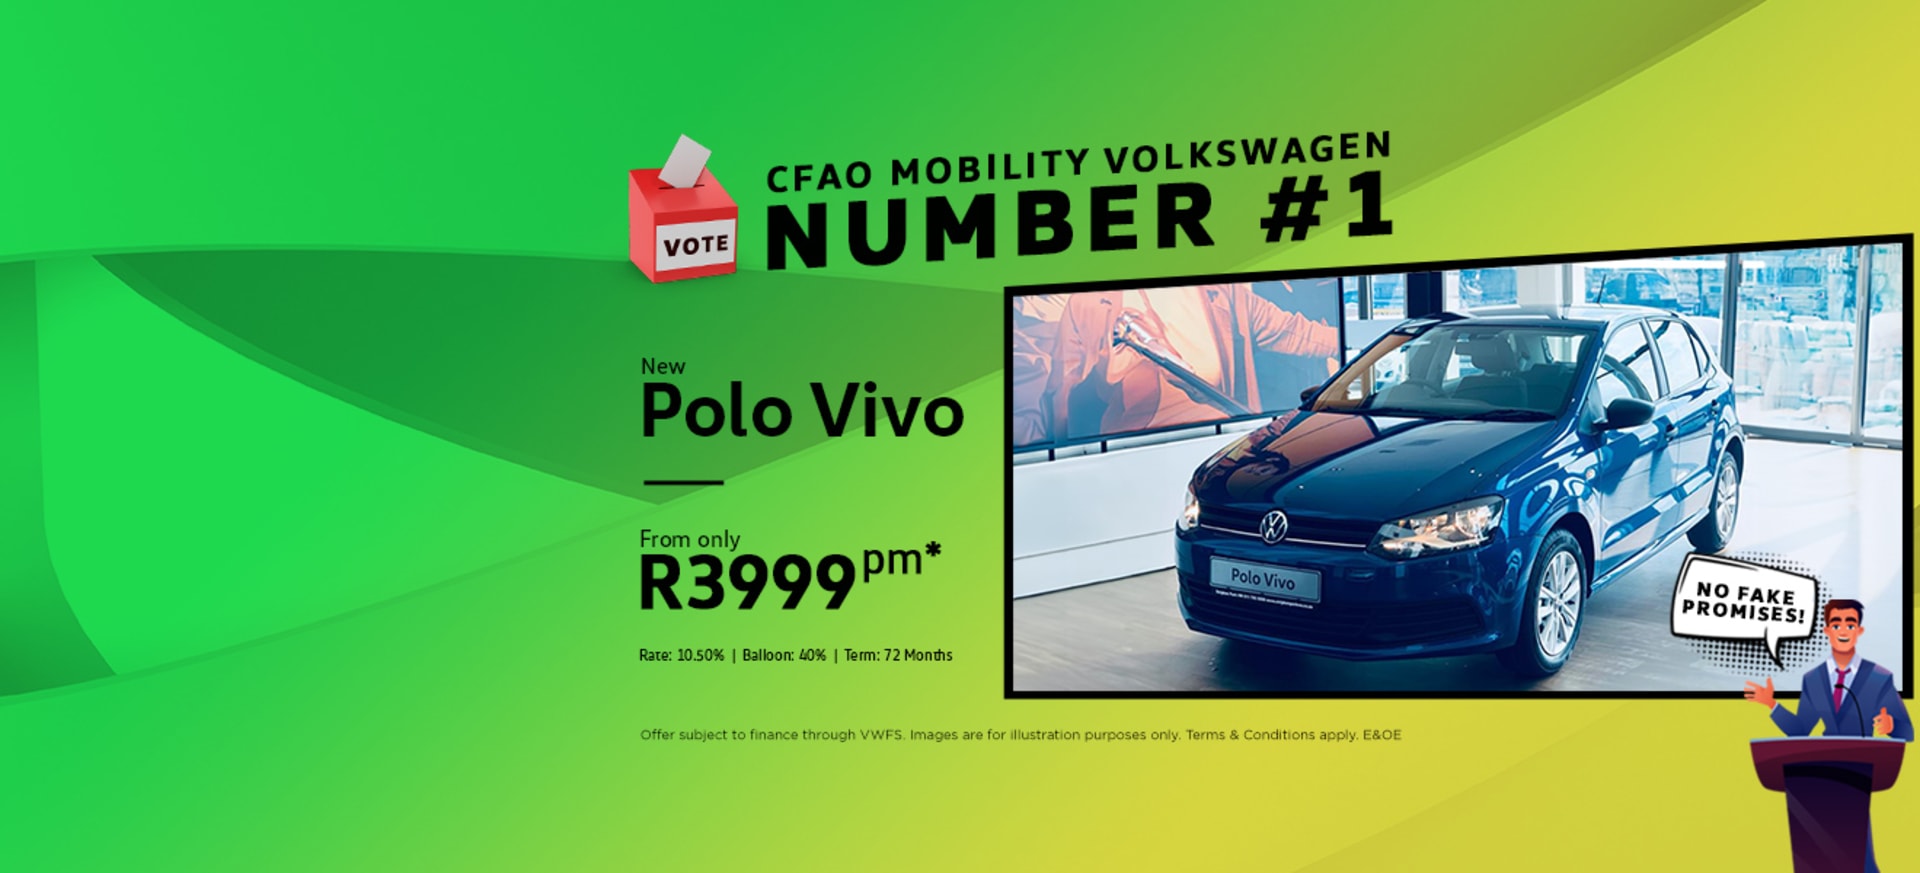 Volkswagen Polo Vivo price R3999 per month plus complimentary insurance